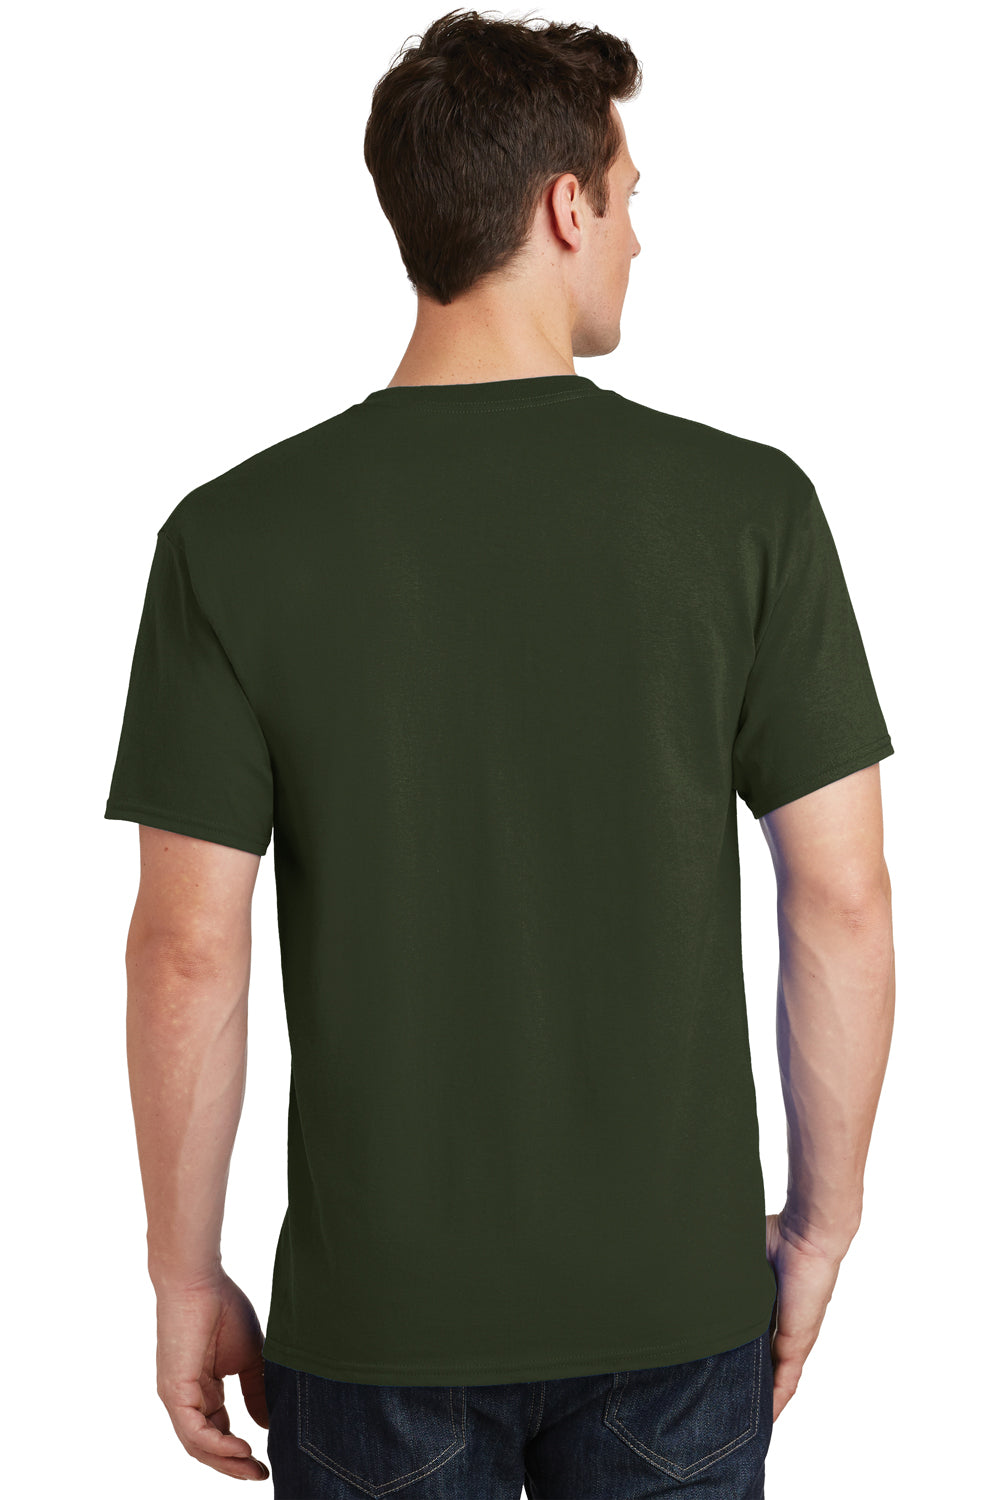 Port & Company PC54 Mens Core Short Sleeve Crewneck T-Shirt Olive Green Back